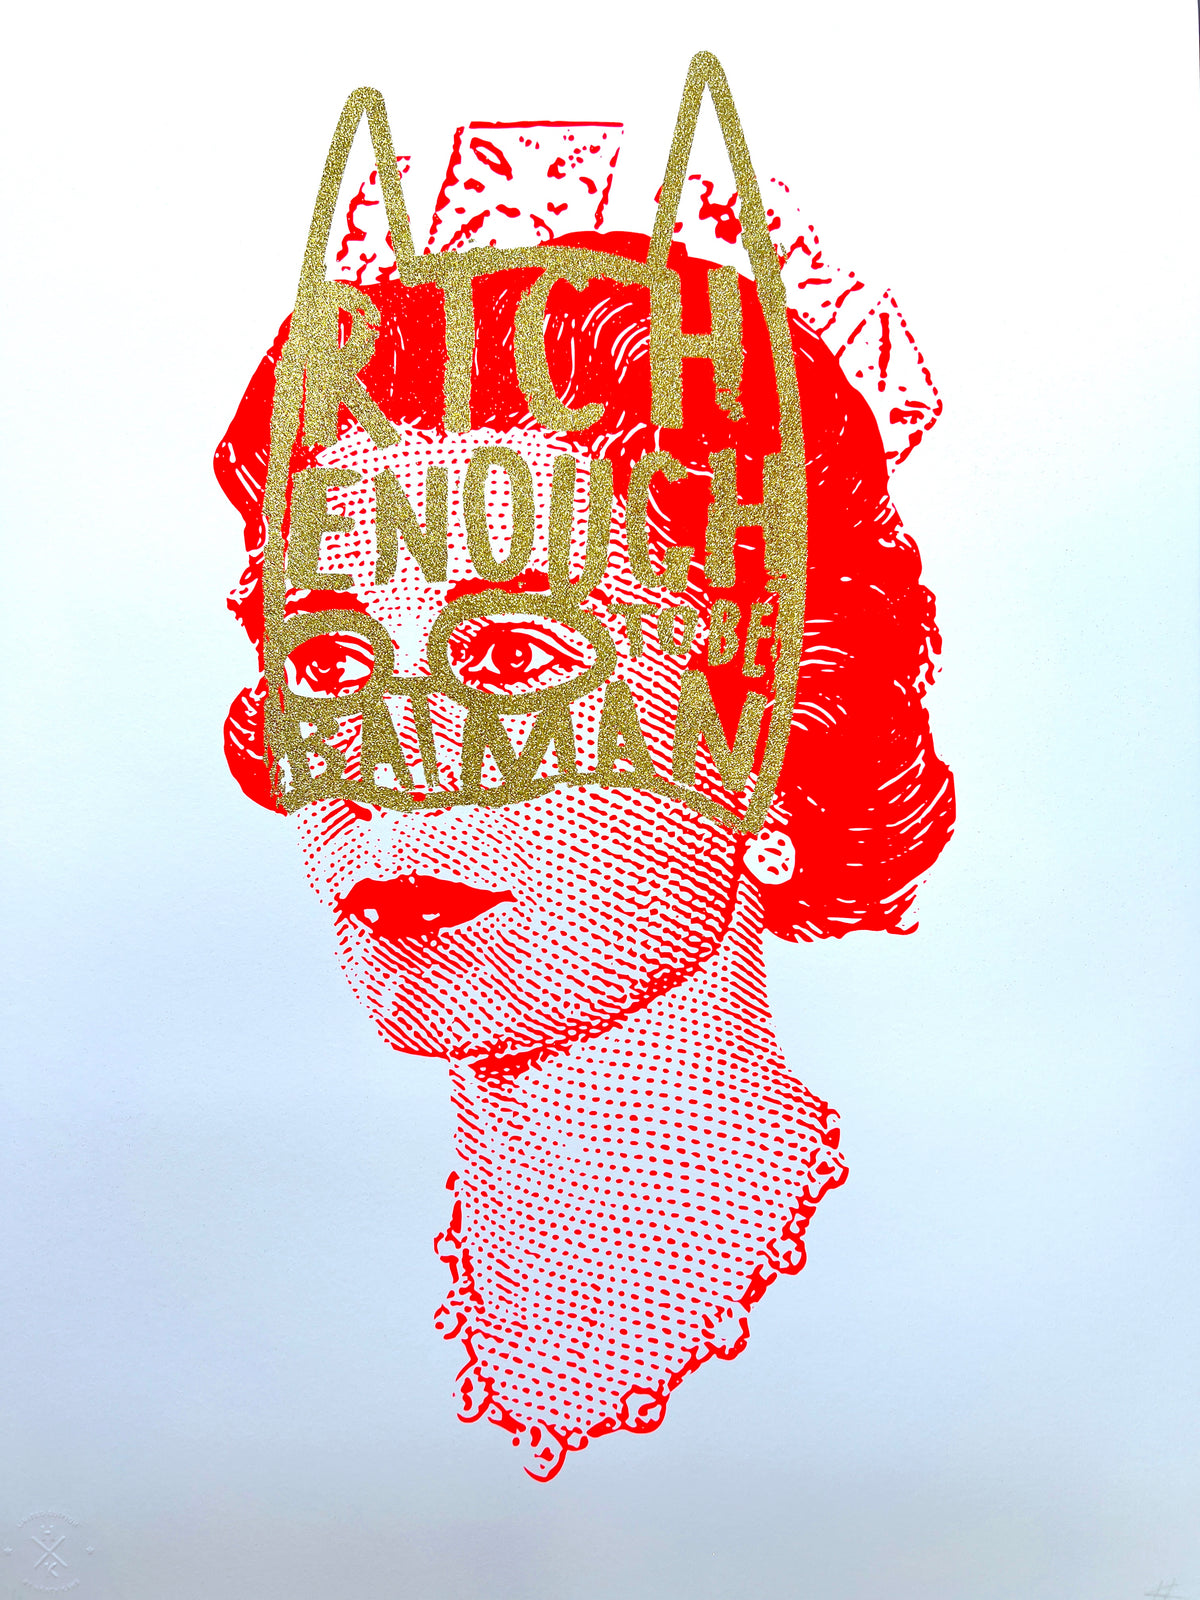 Rich Enough To Be Batman-Jubilee (Hooked Custom Framing)by Heath Kane